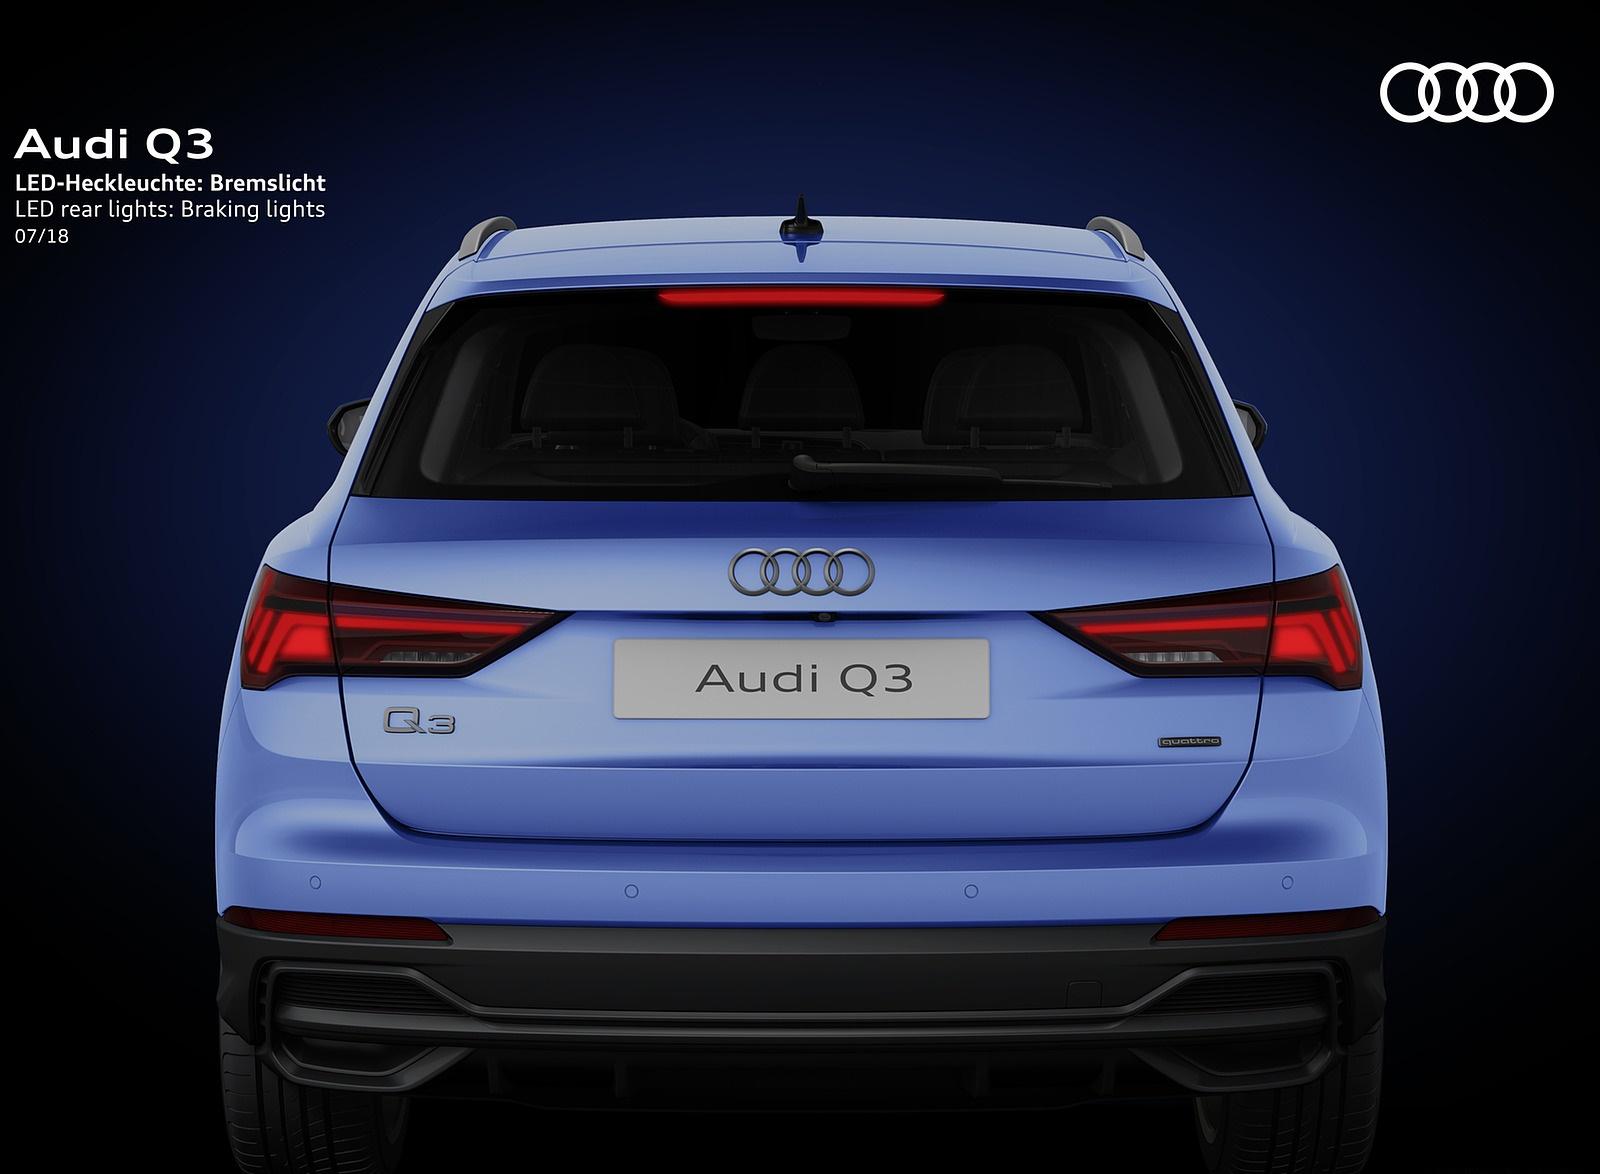 Audi Q3 LED rear lights Bracking lights Wallpaper (24)